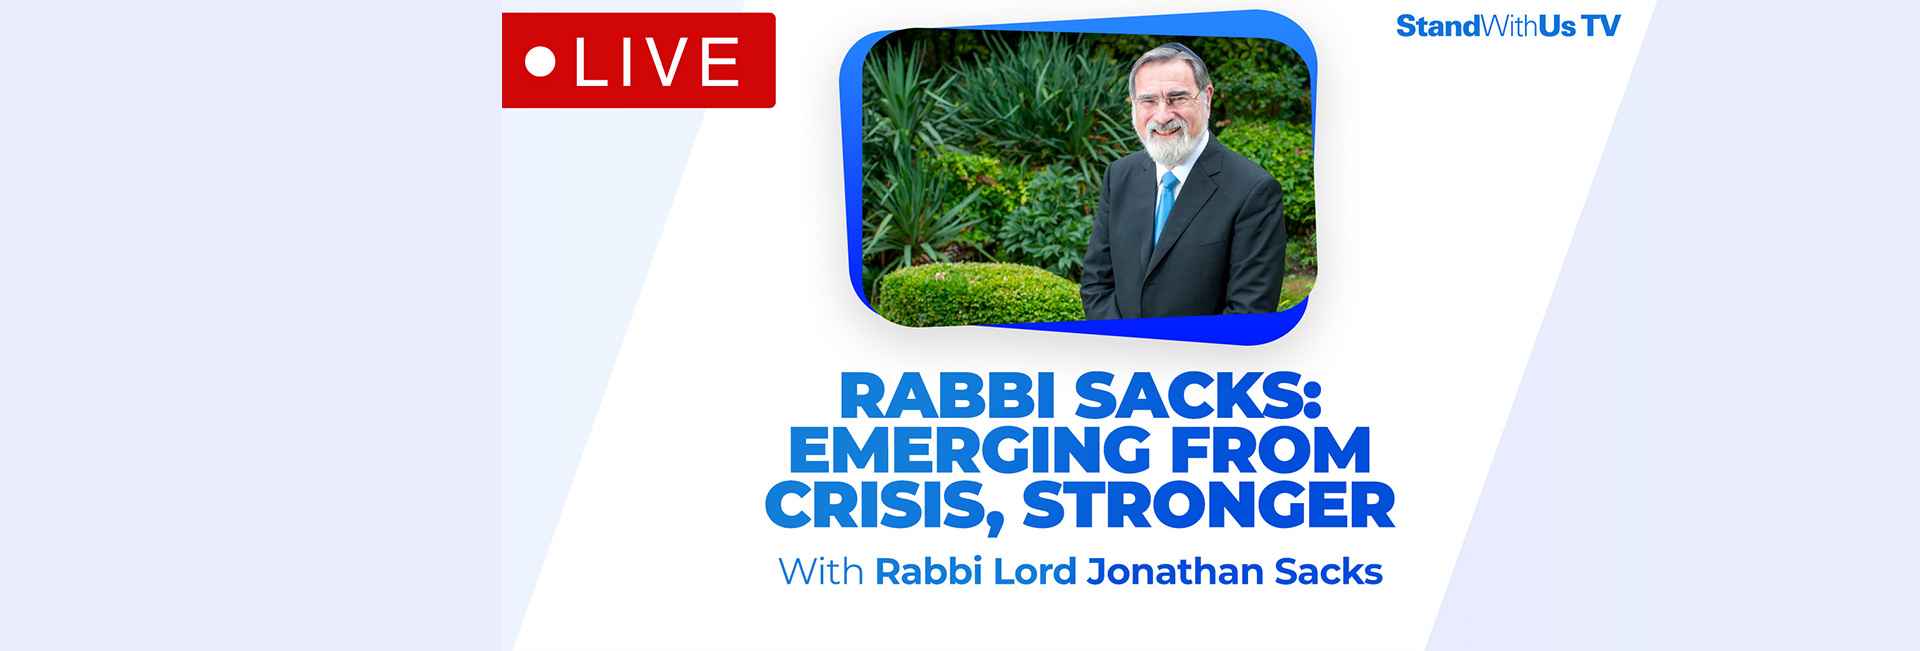 Rabbi Sacks — Emerging from Crisis, Stronger | SWUConnect #10